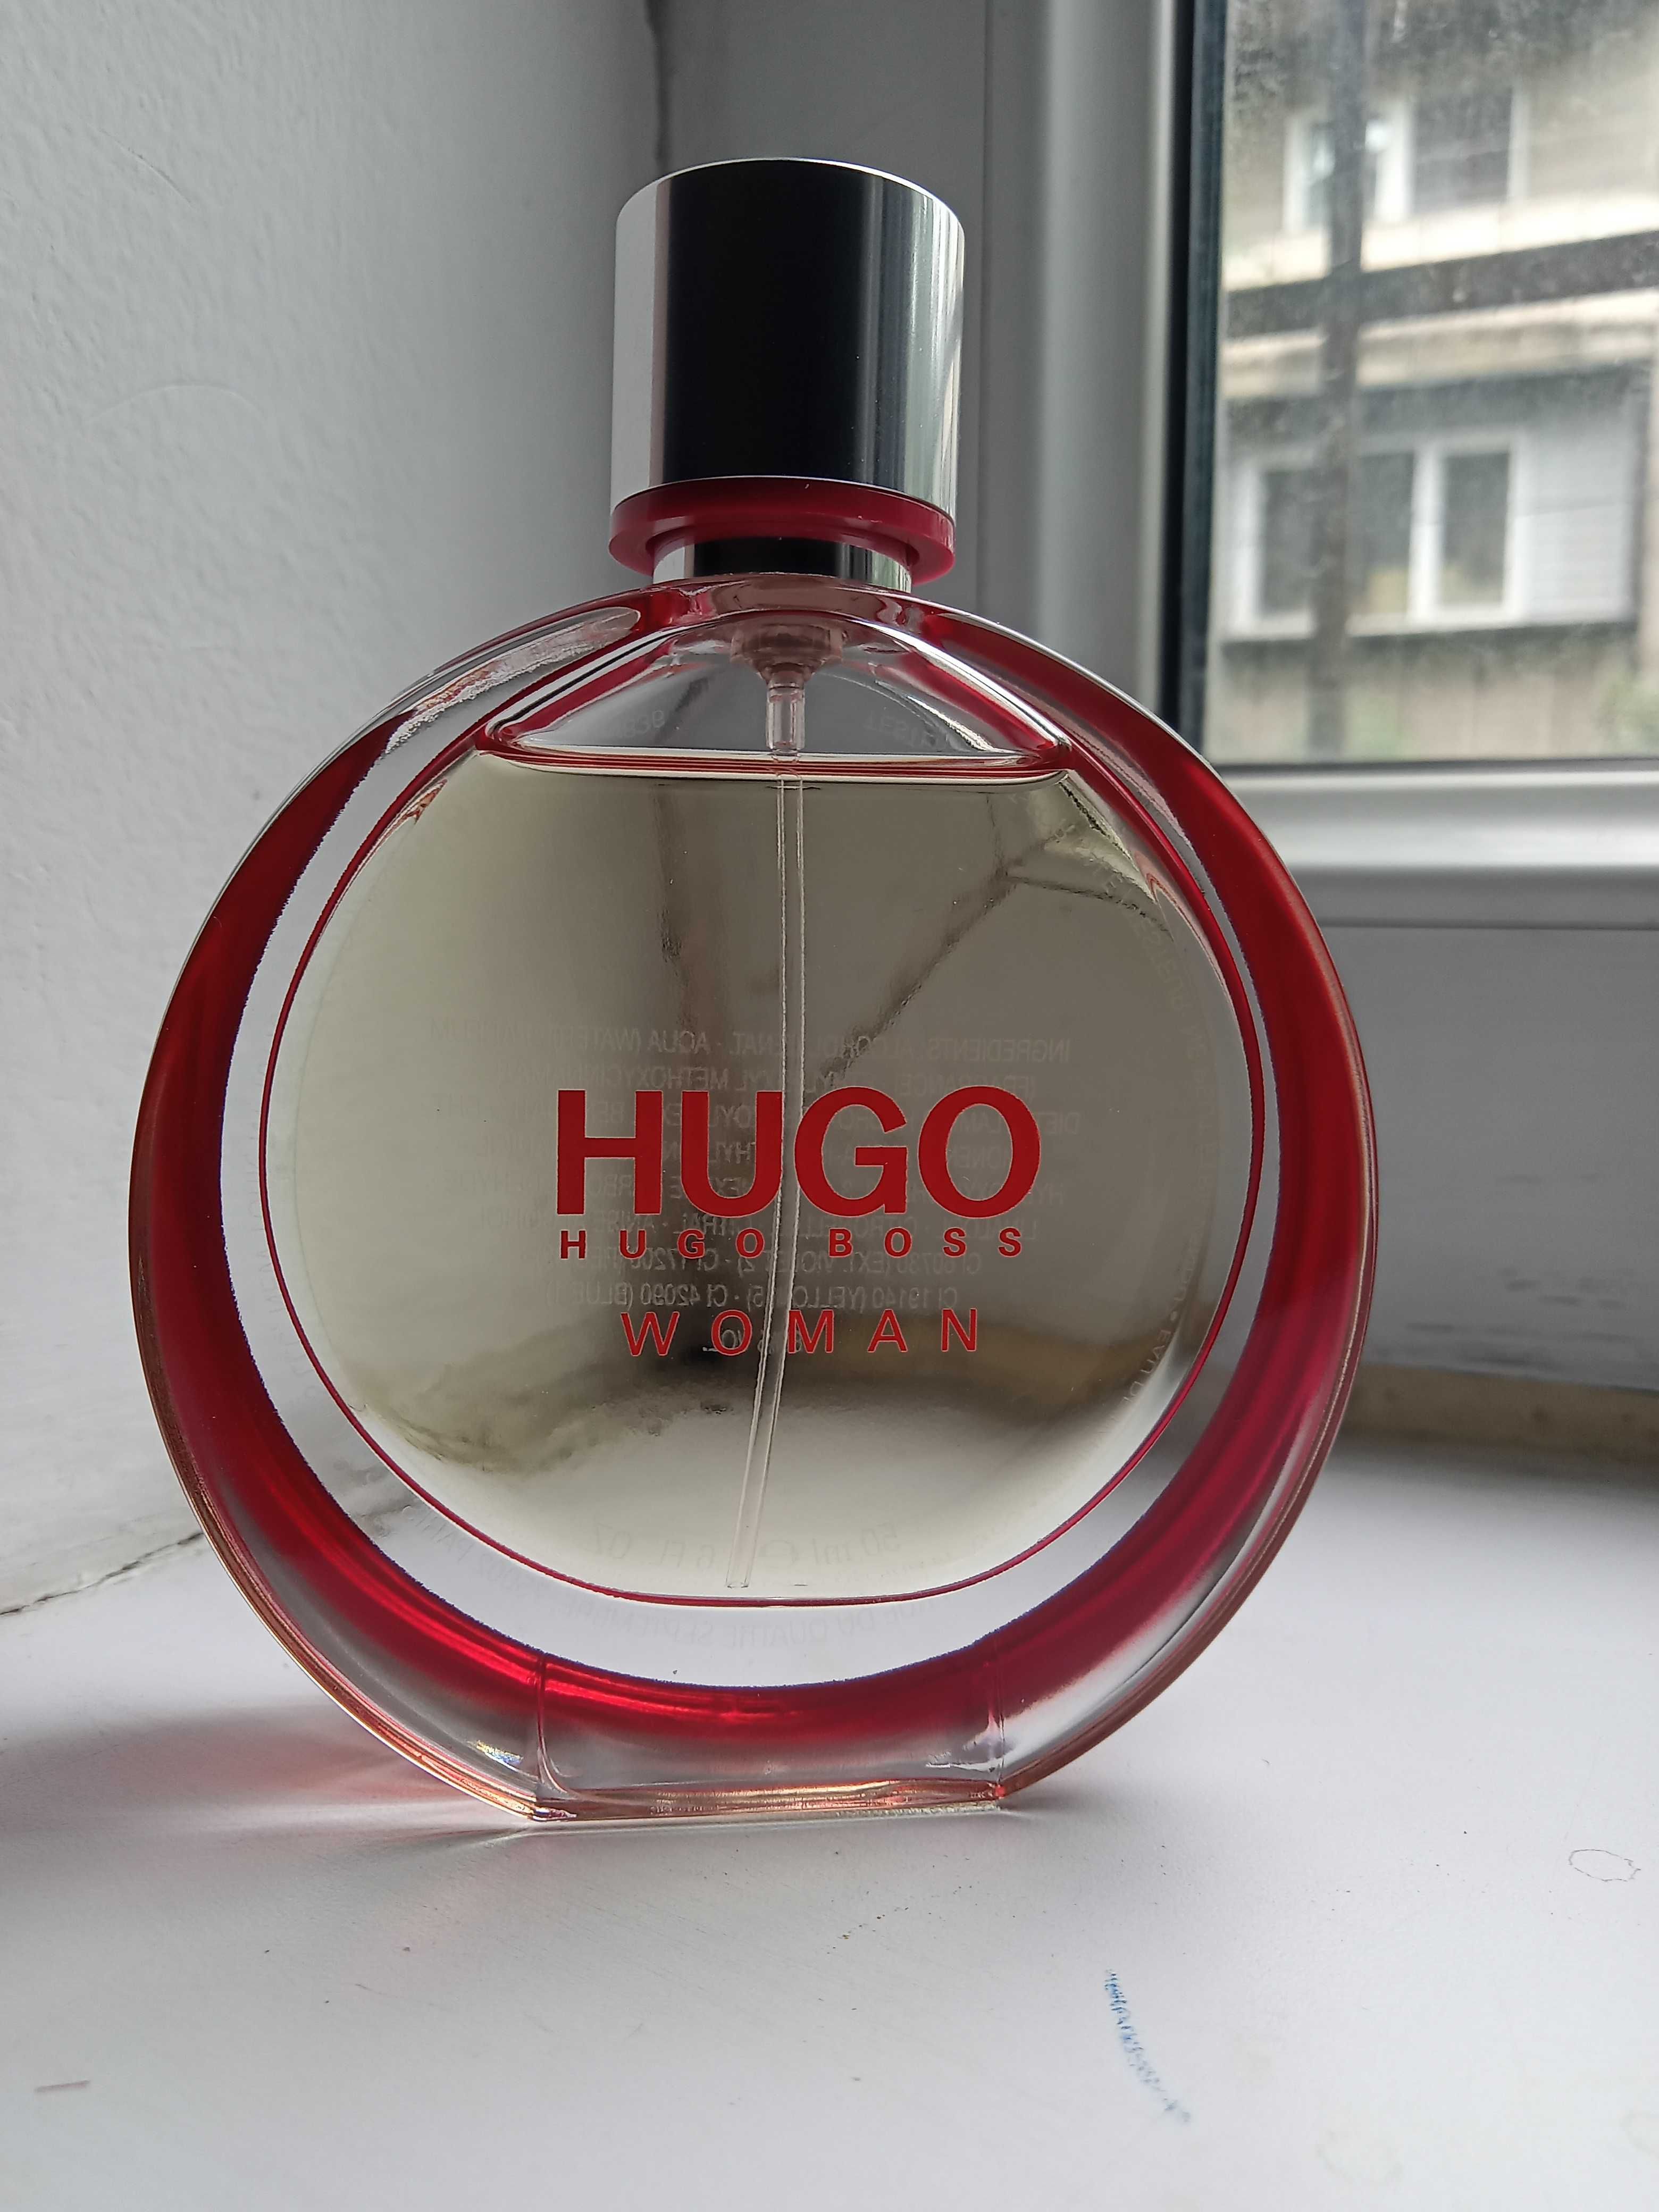 Парфюм для женщин Hugo boss woman